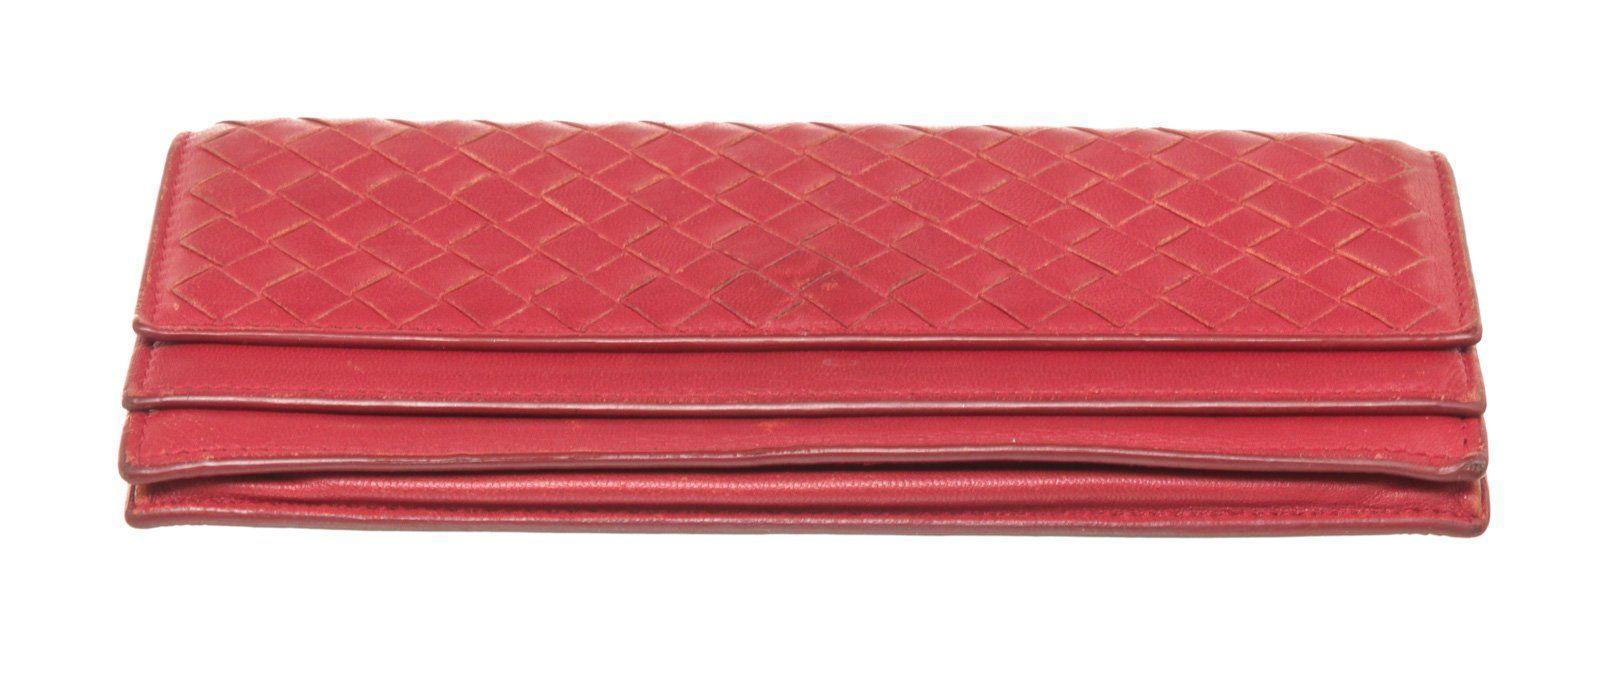 Bottega Veneta Red Leather Continental Wallet